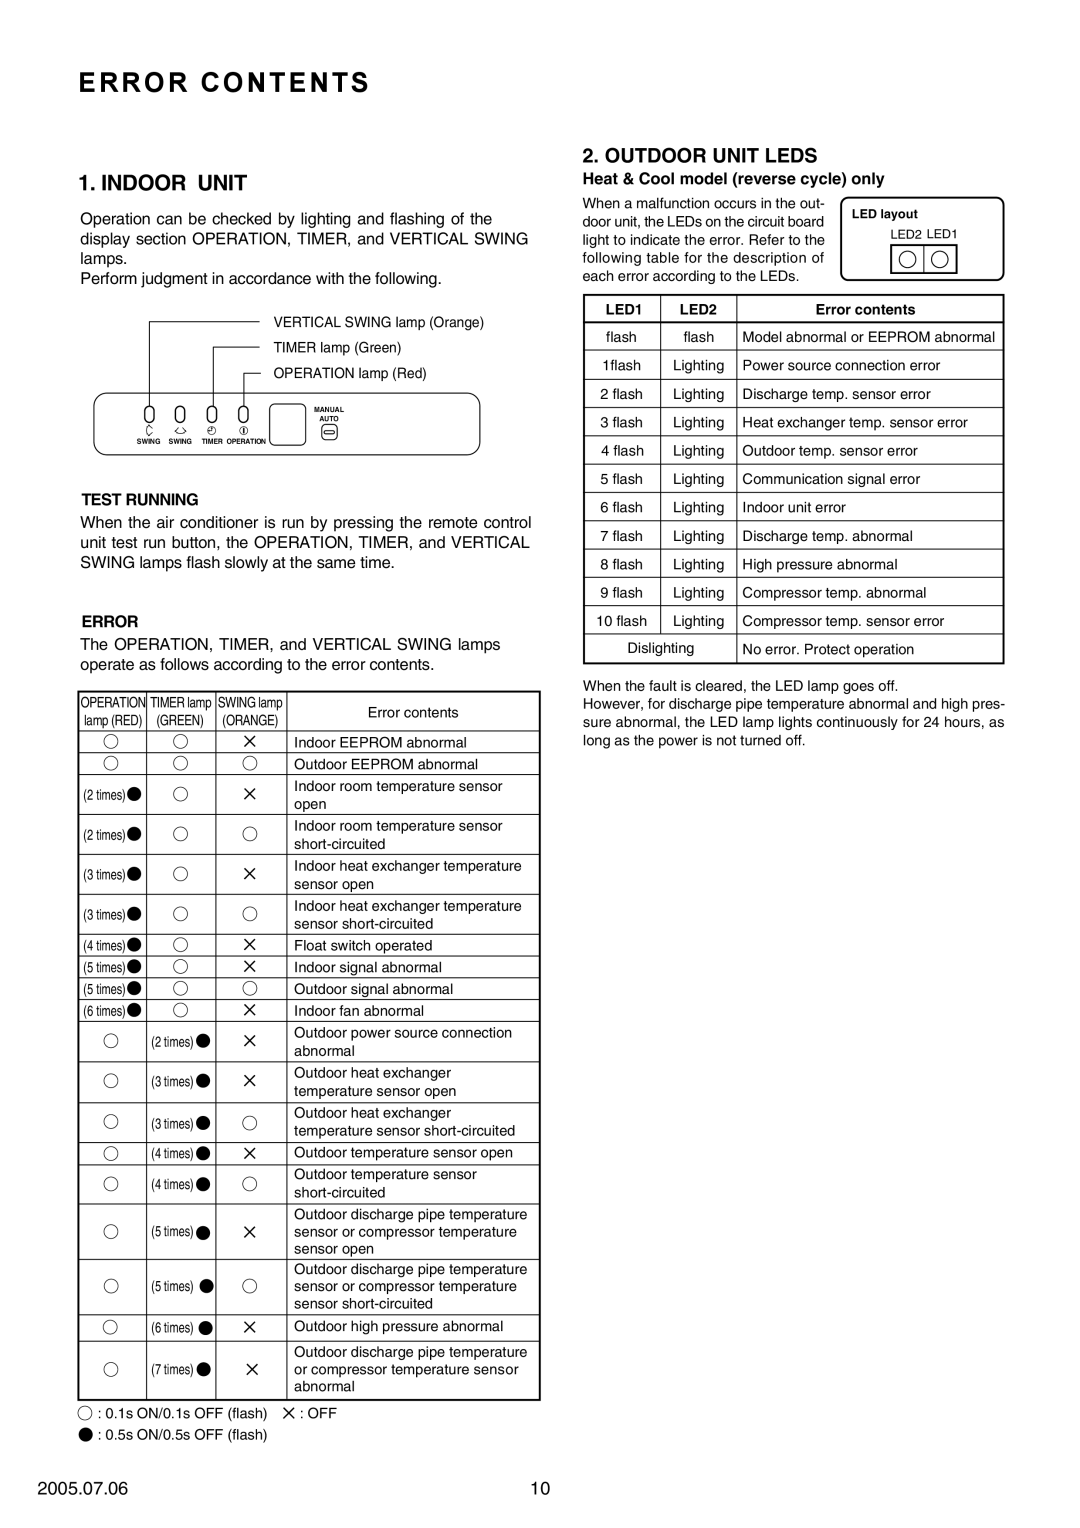 Fujitsu RO-36UA, RO-36FA, RY-36UA, RY-36FA Error Contents, Indoor Unit, Outdoor Unit Leds, 2005.07.06, Test Running 